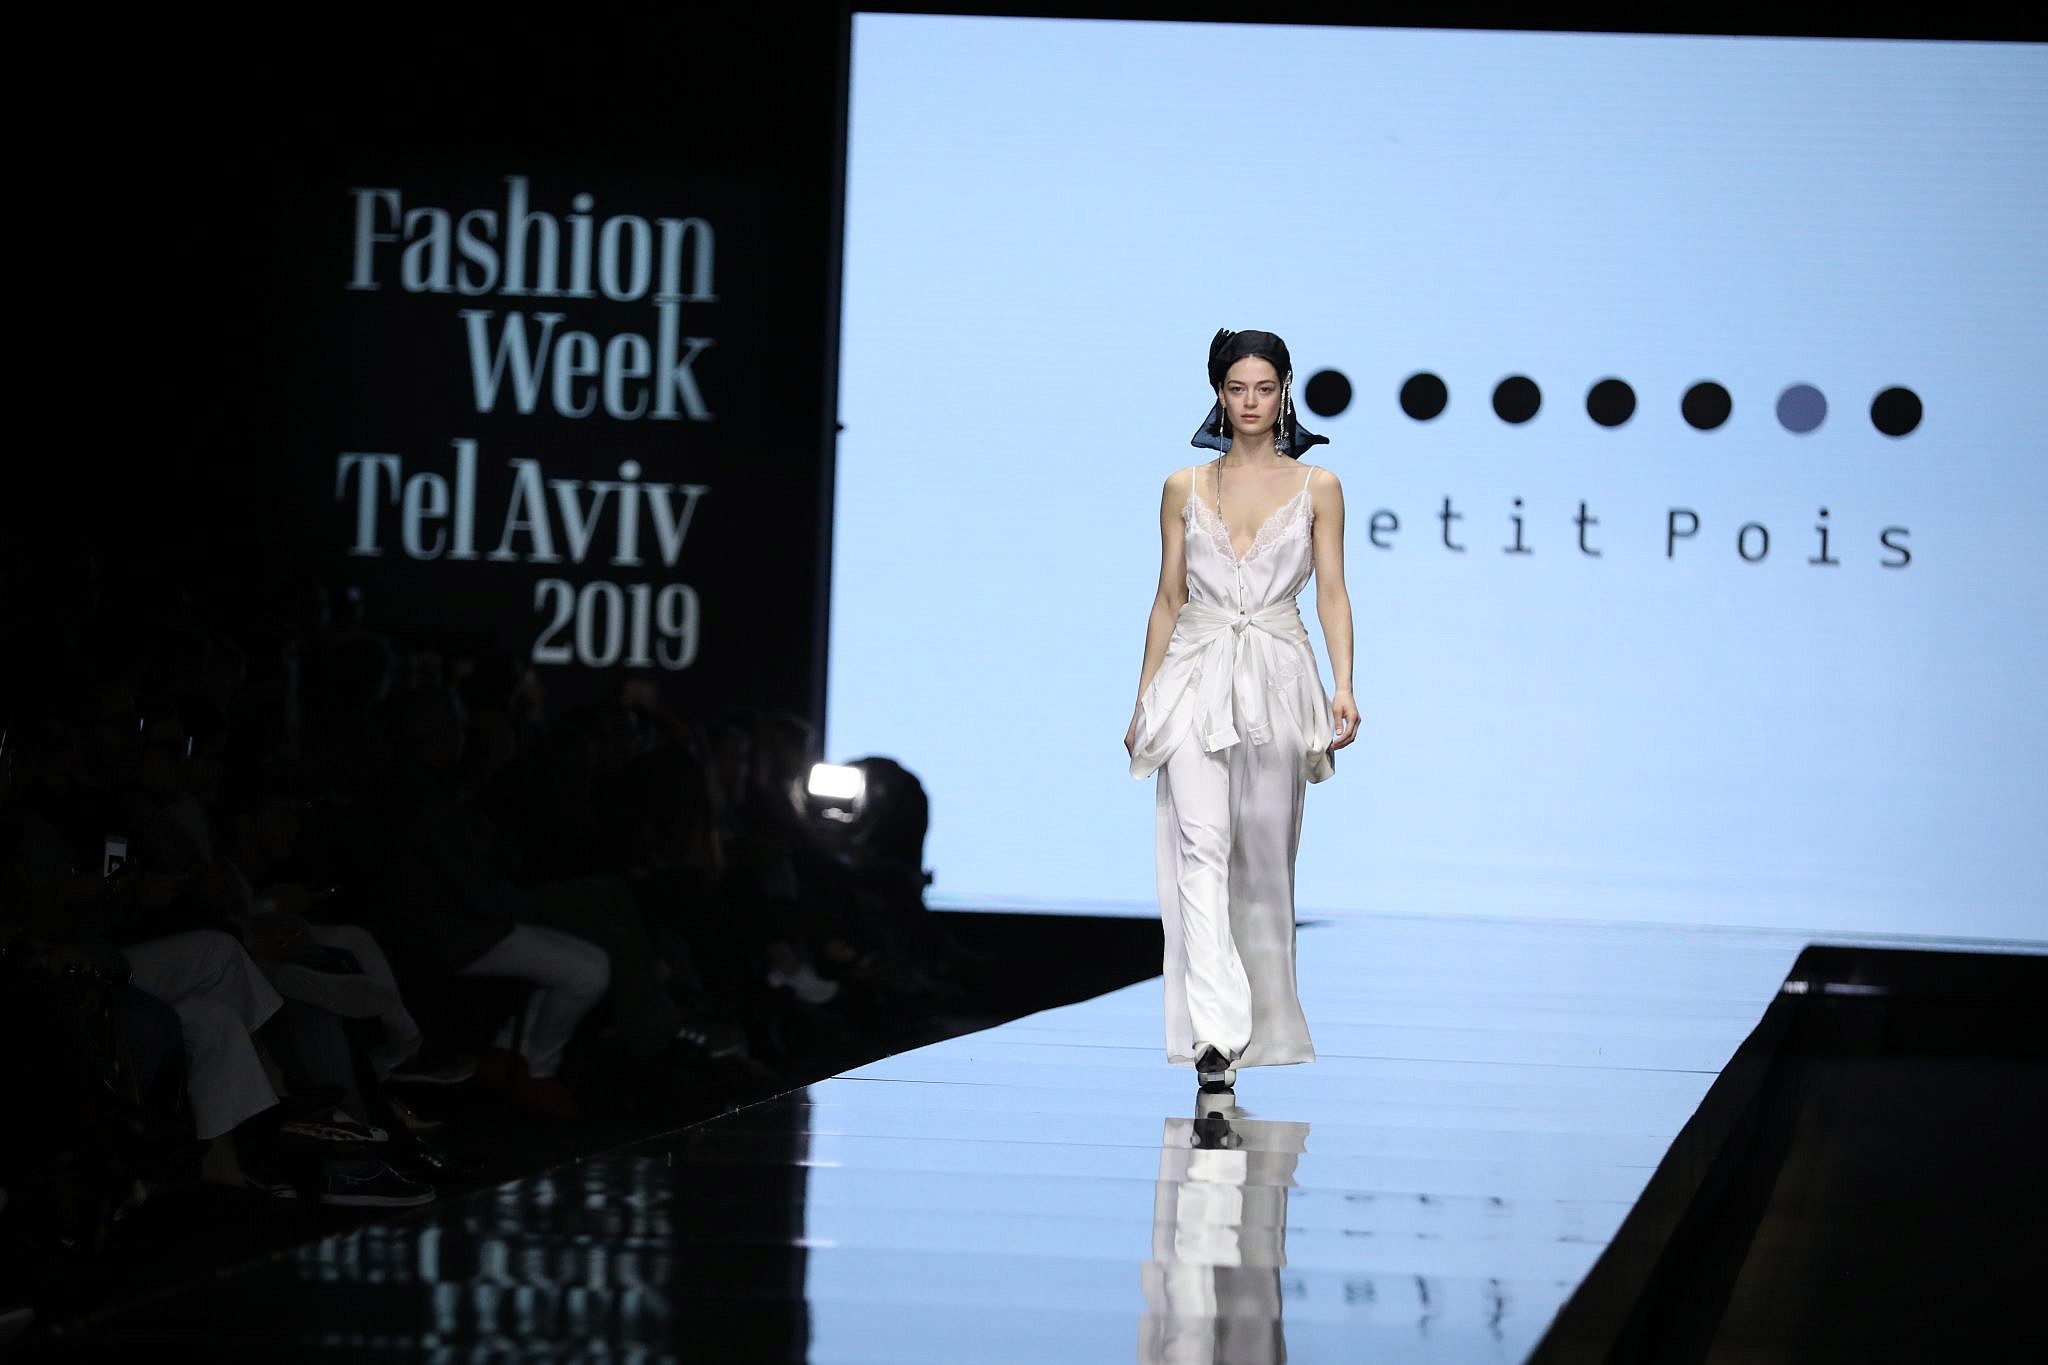 PETITE POIS מתוך התצוגה של מפעל הפיס בשבוע האופנה 2019. צילום אדריאן סבל